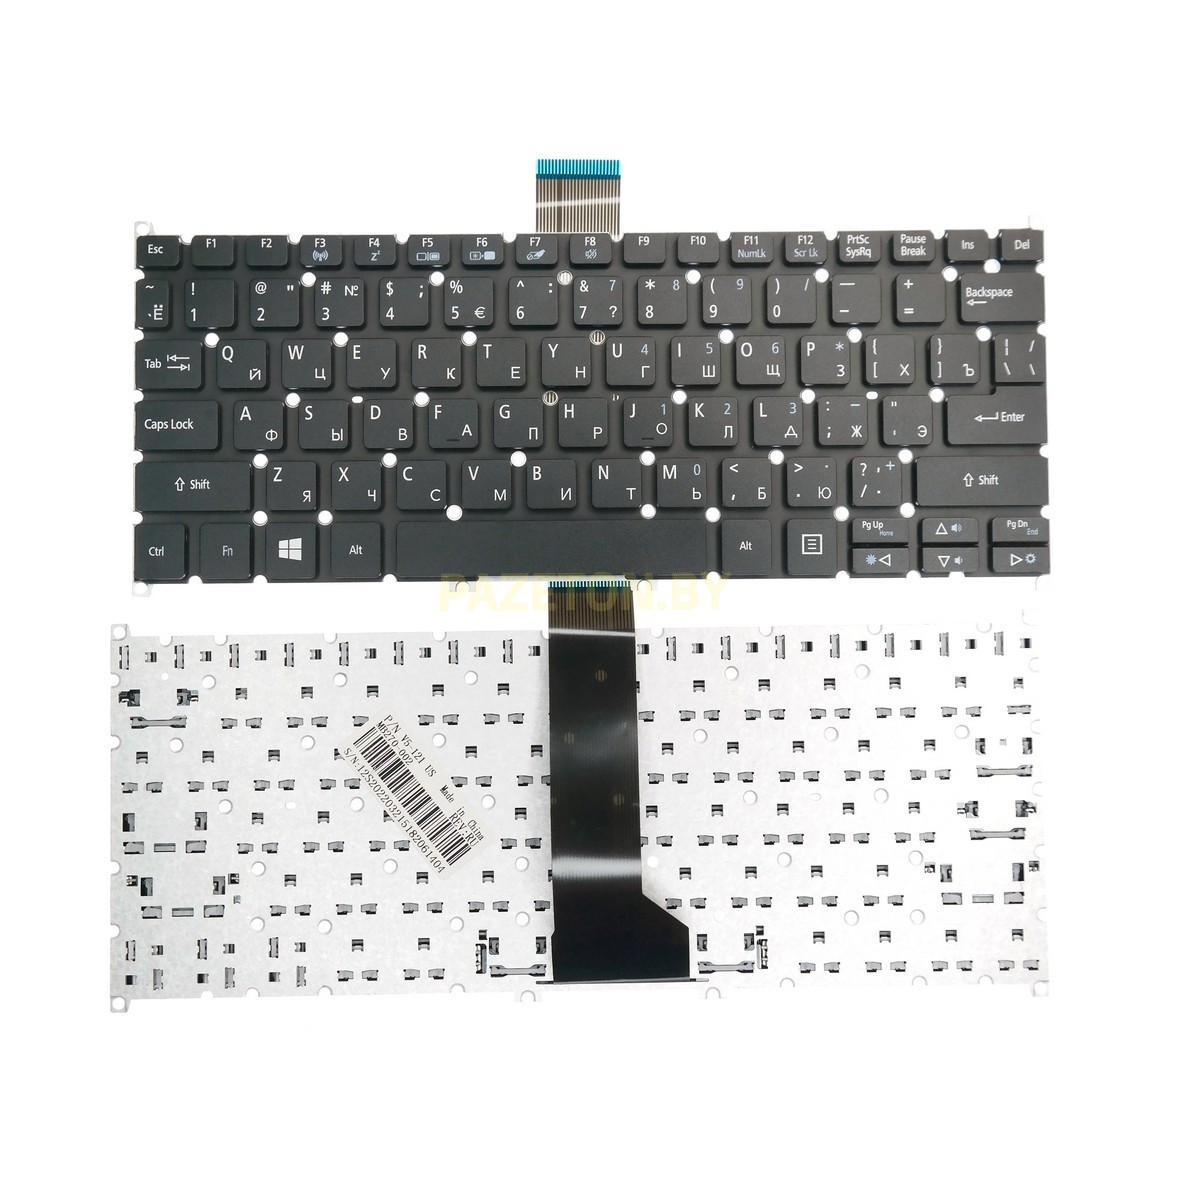 Клавиатура для ноутбука Acer Aspire V3-372 V5-122 V5-122P V5-132P черная